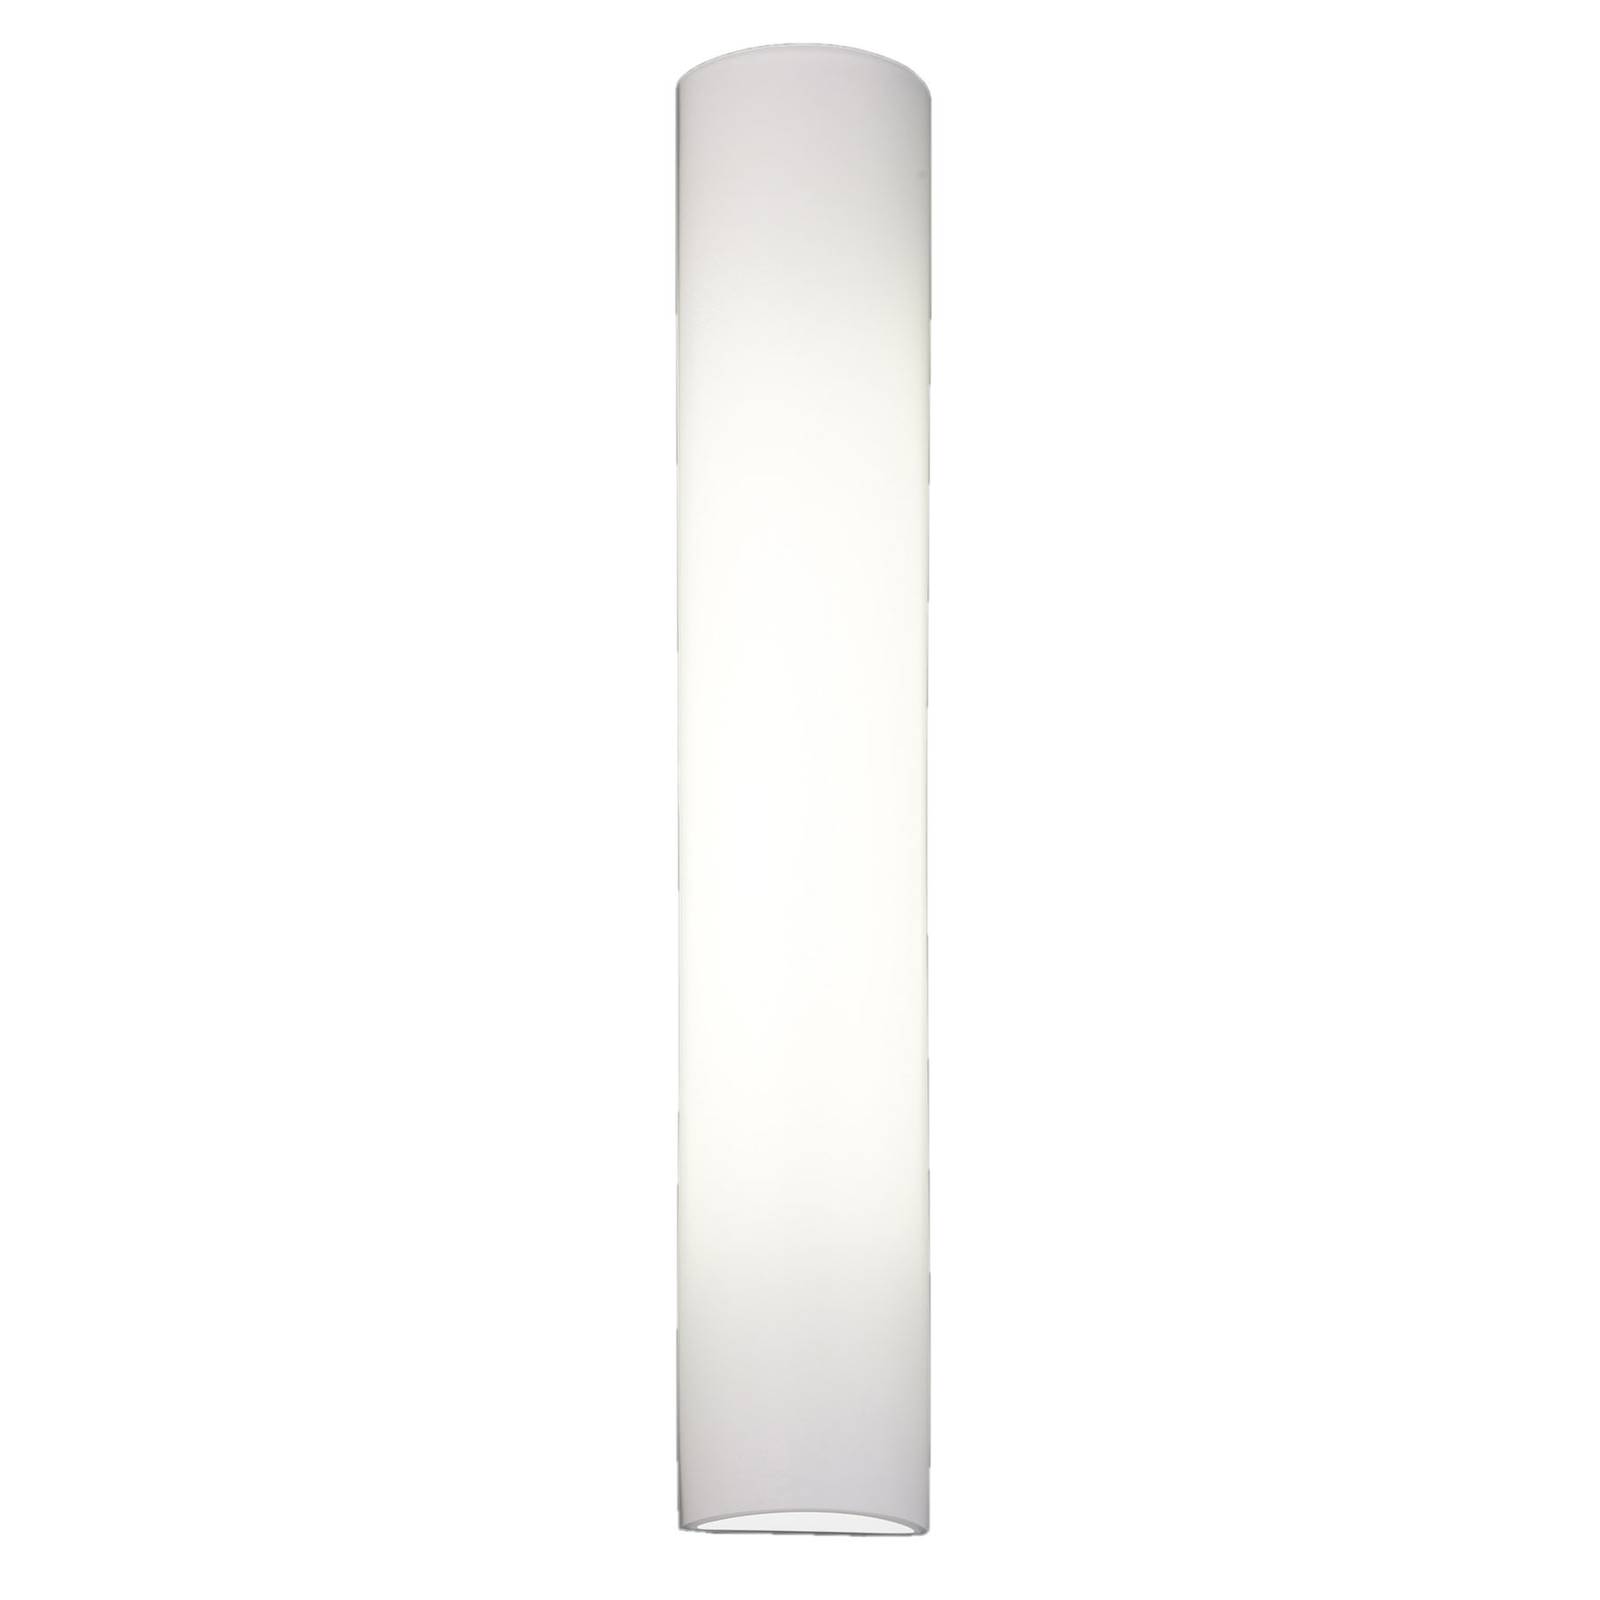 Image of BANKAMP Cromo applique LED di vetro, altezza 54cm